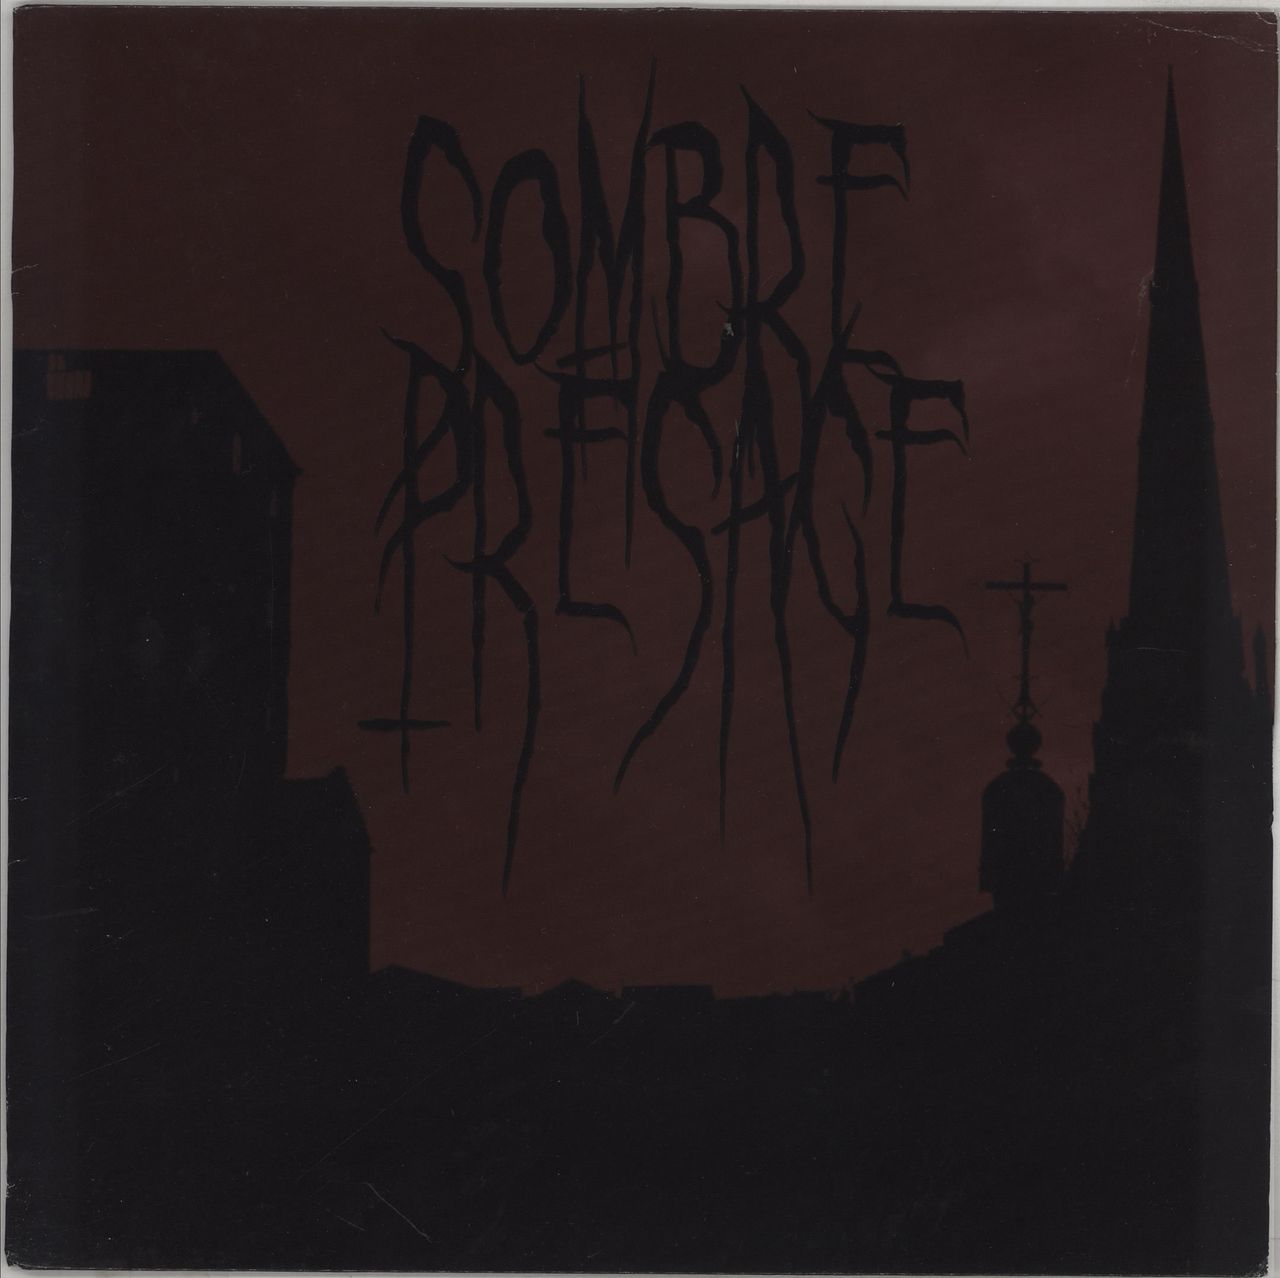 Sombre Presage Errance - Red Vinyl French vinyl LP album (LP record) CULT039